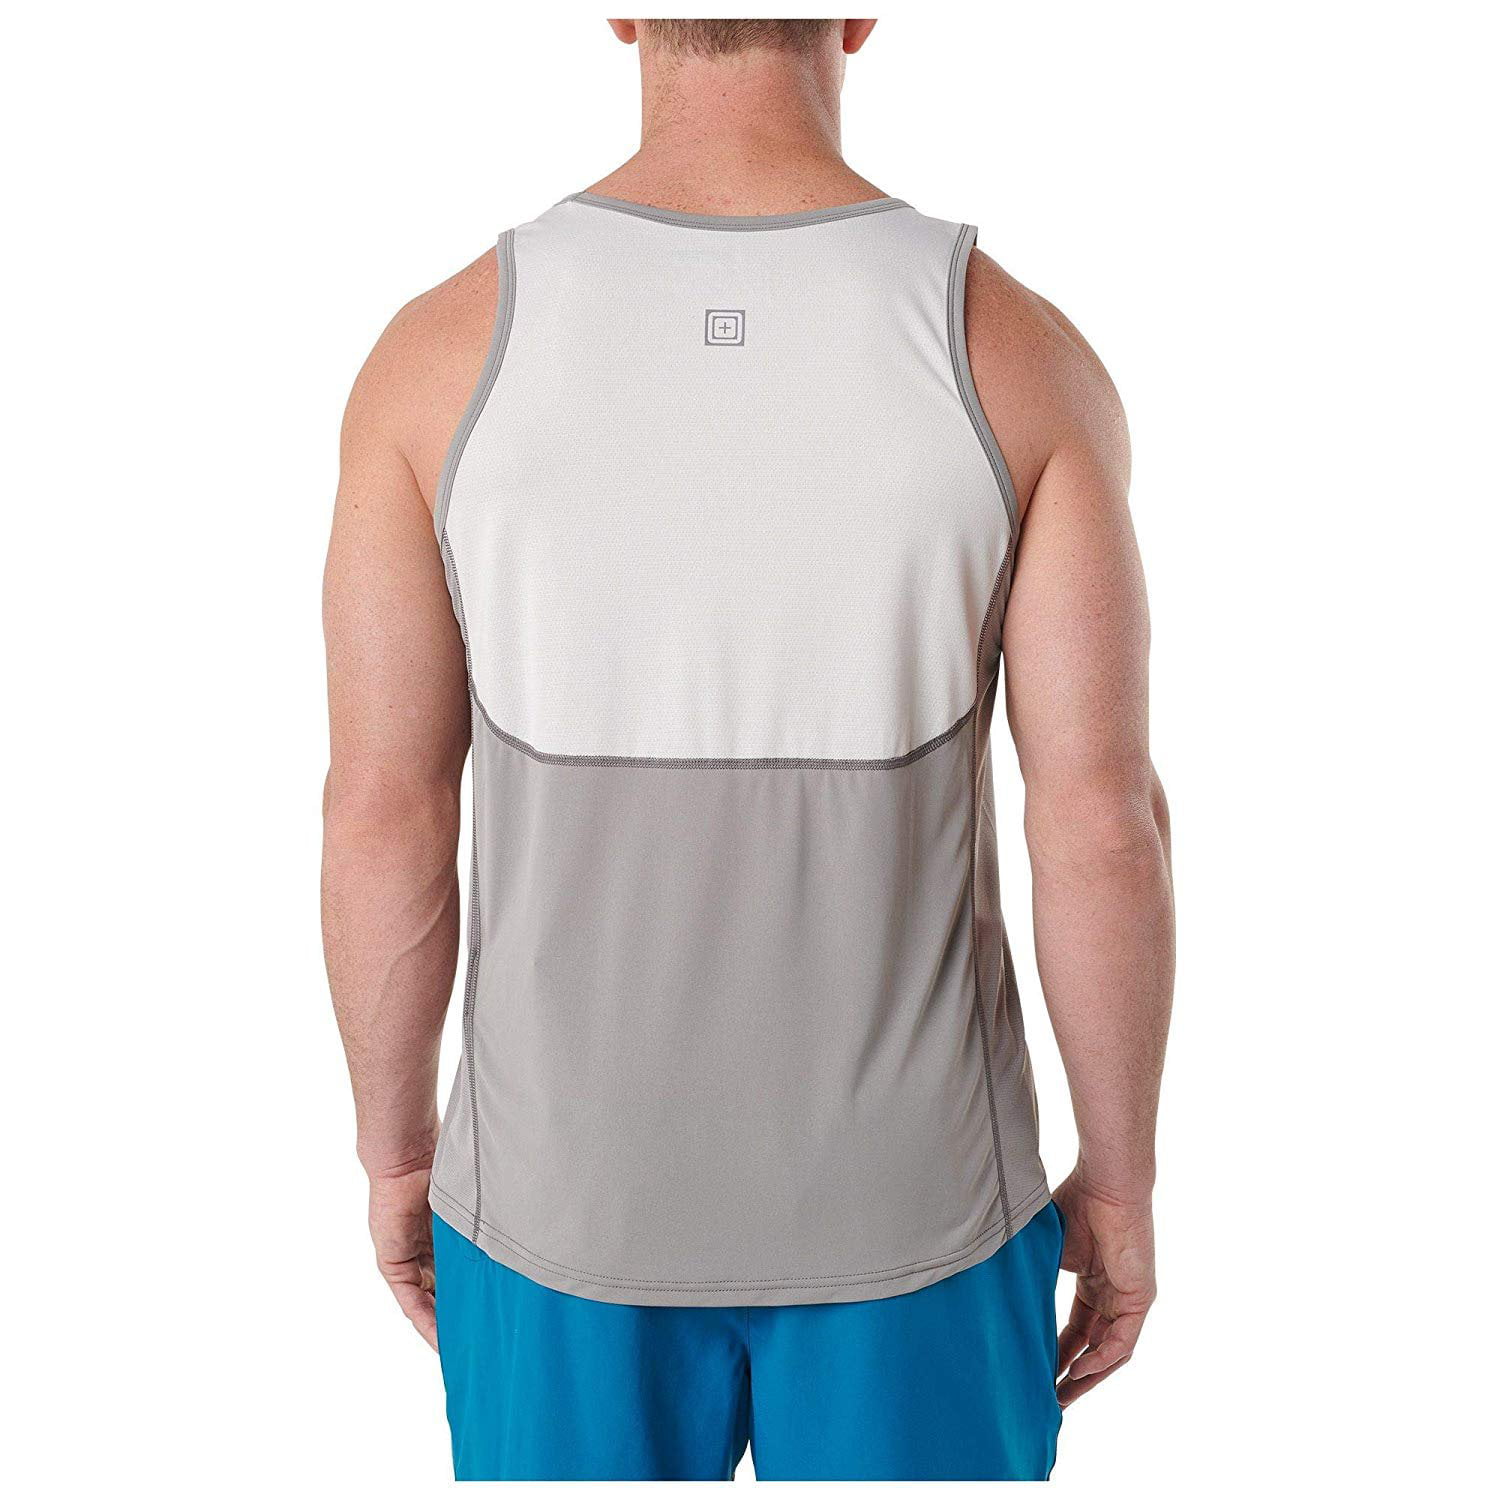 Style 82113 5.11 Tactical Men's Anti-Odor Fabric Max Effort Short Sleeve Top 